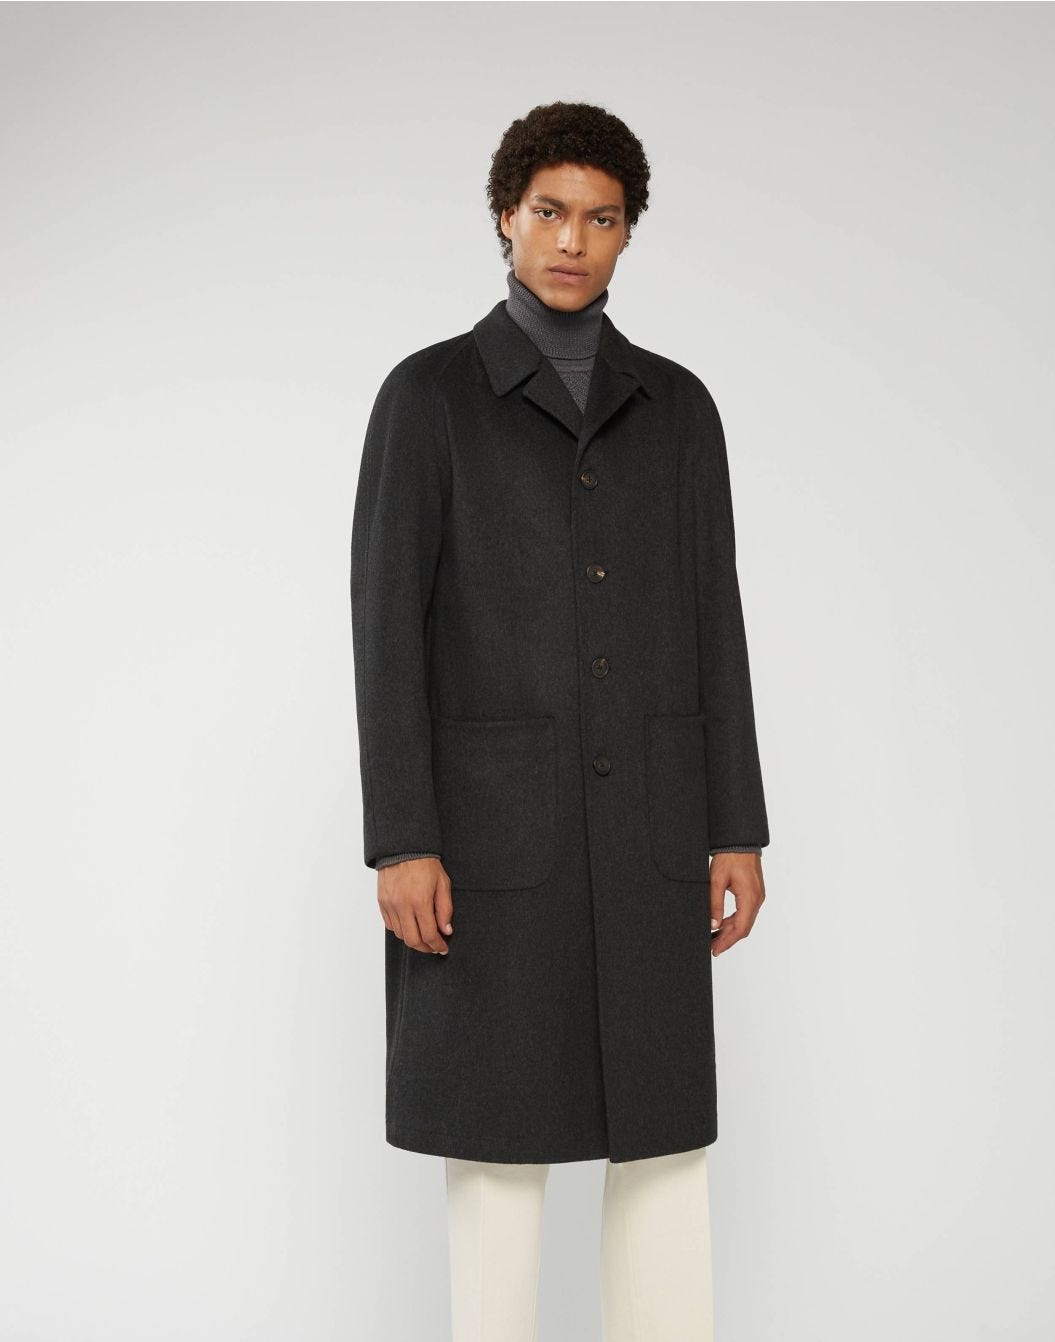 Oversized coat in camel-brown wool